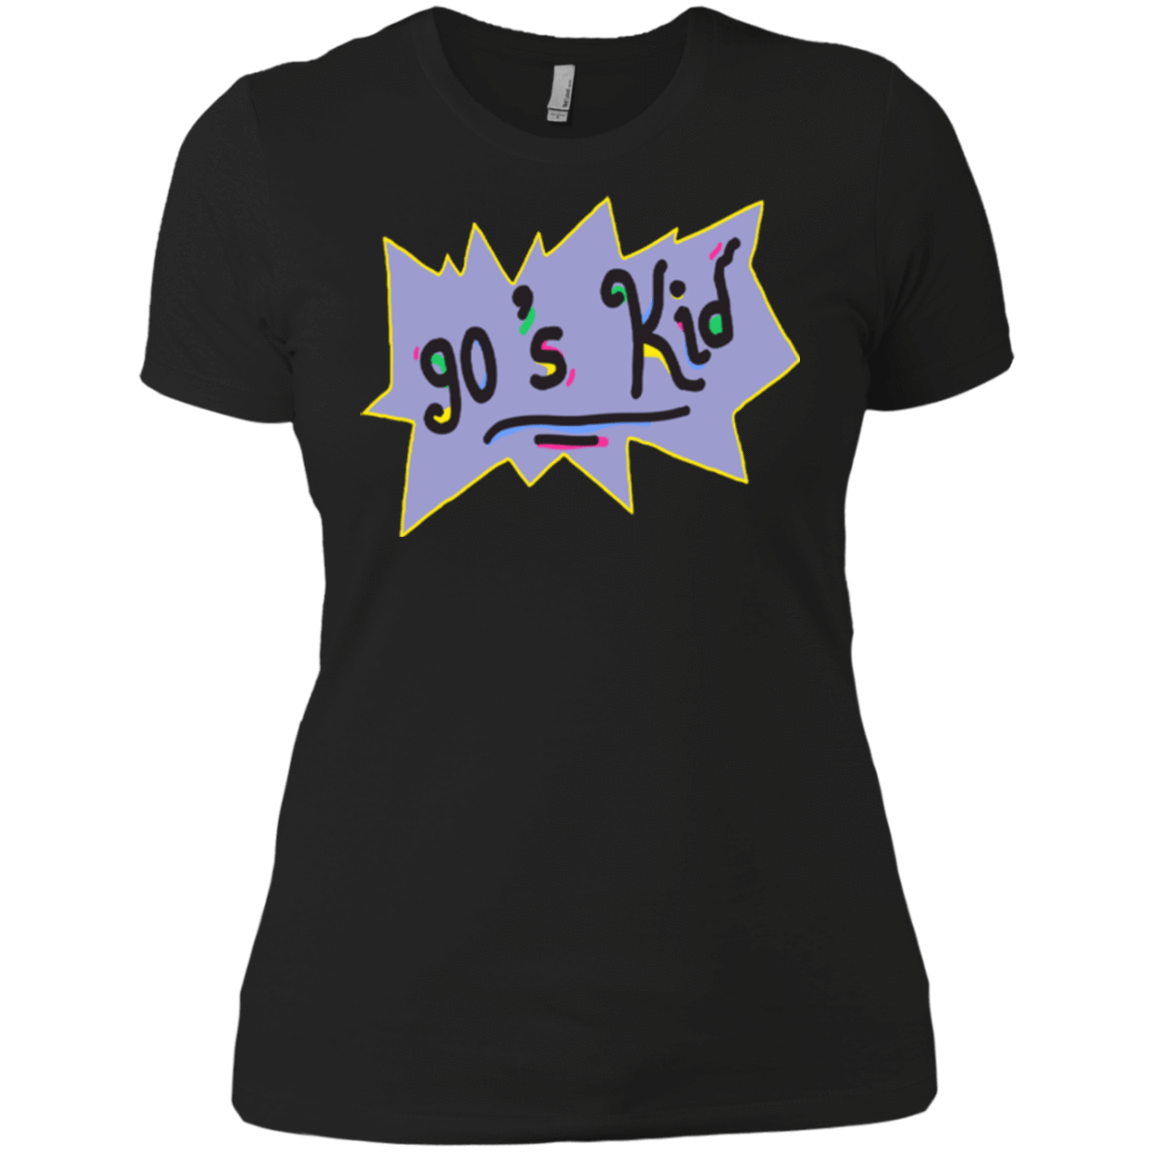 T-Shirts Black / X-Small 90's Kid Women's Premium T-Shirt